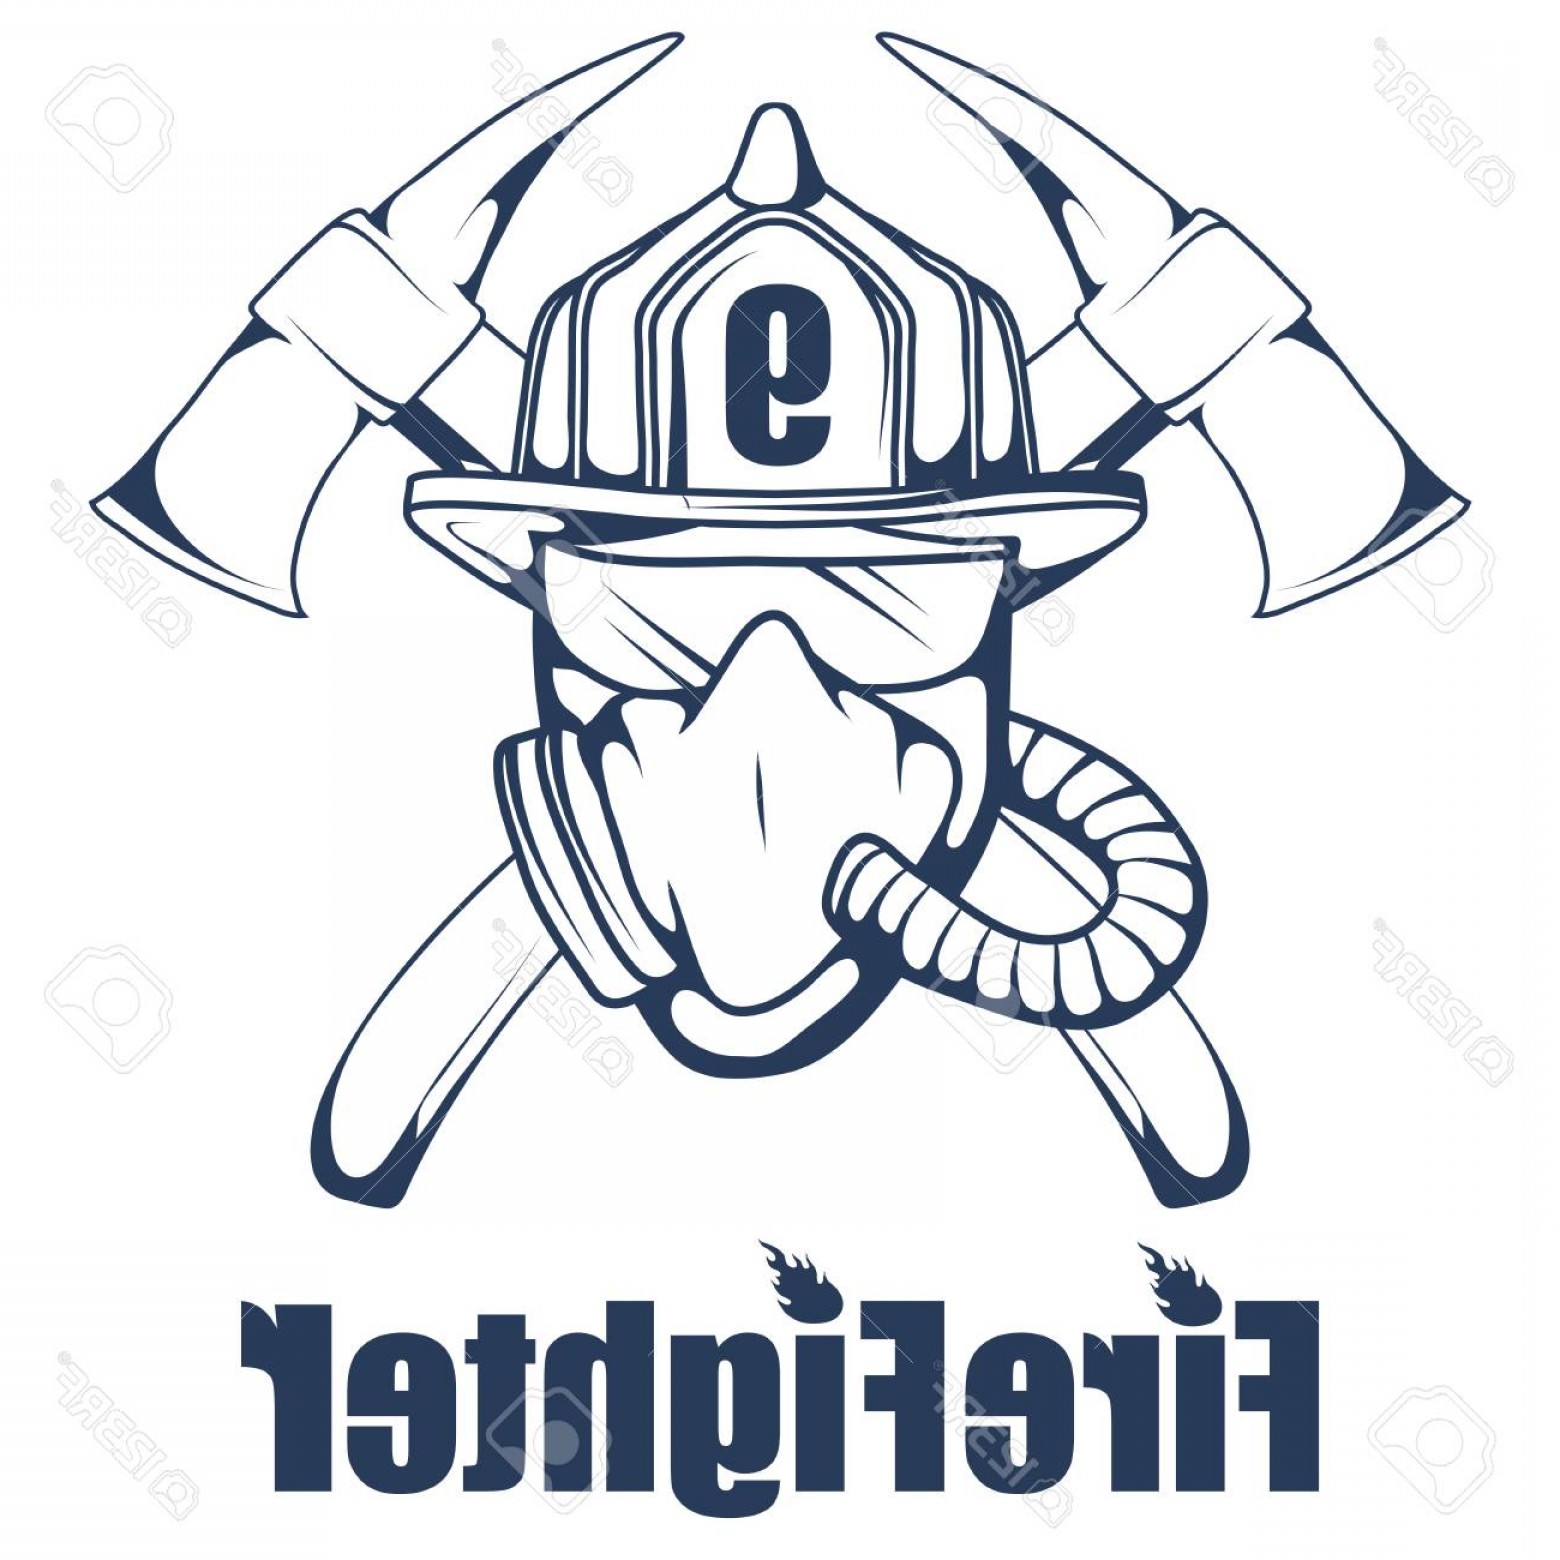 Firefighter эмблема